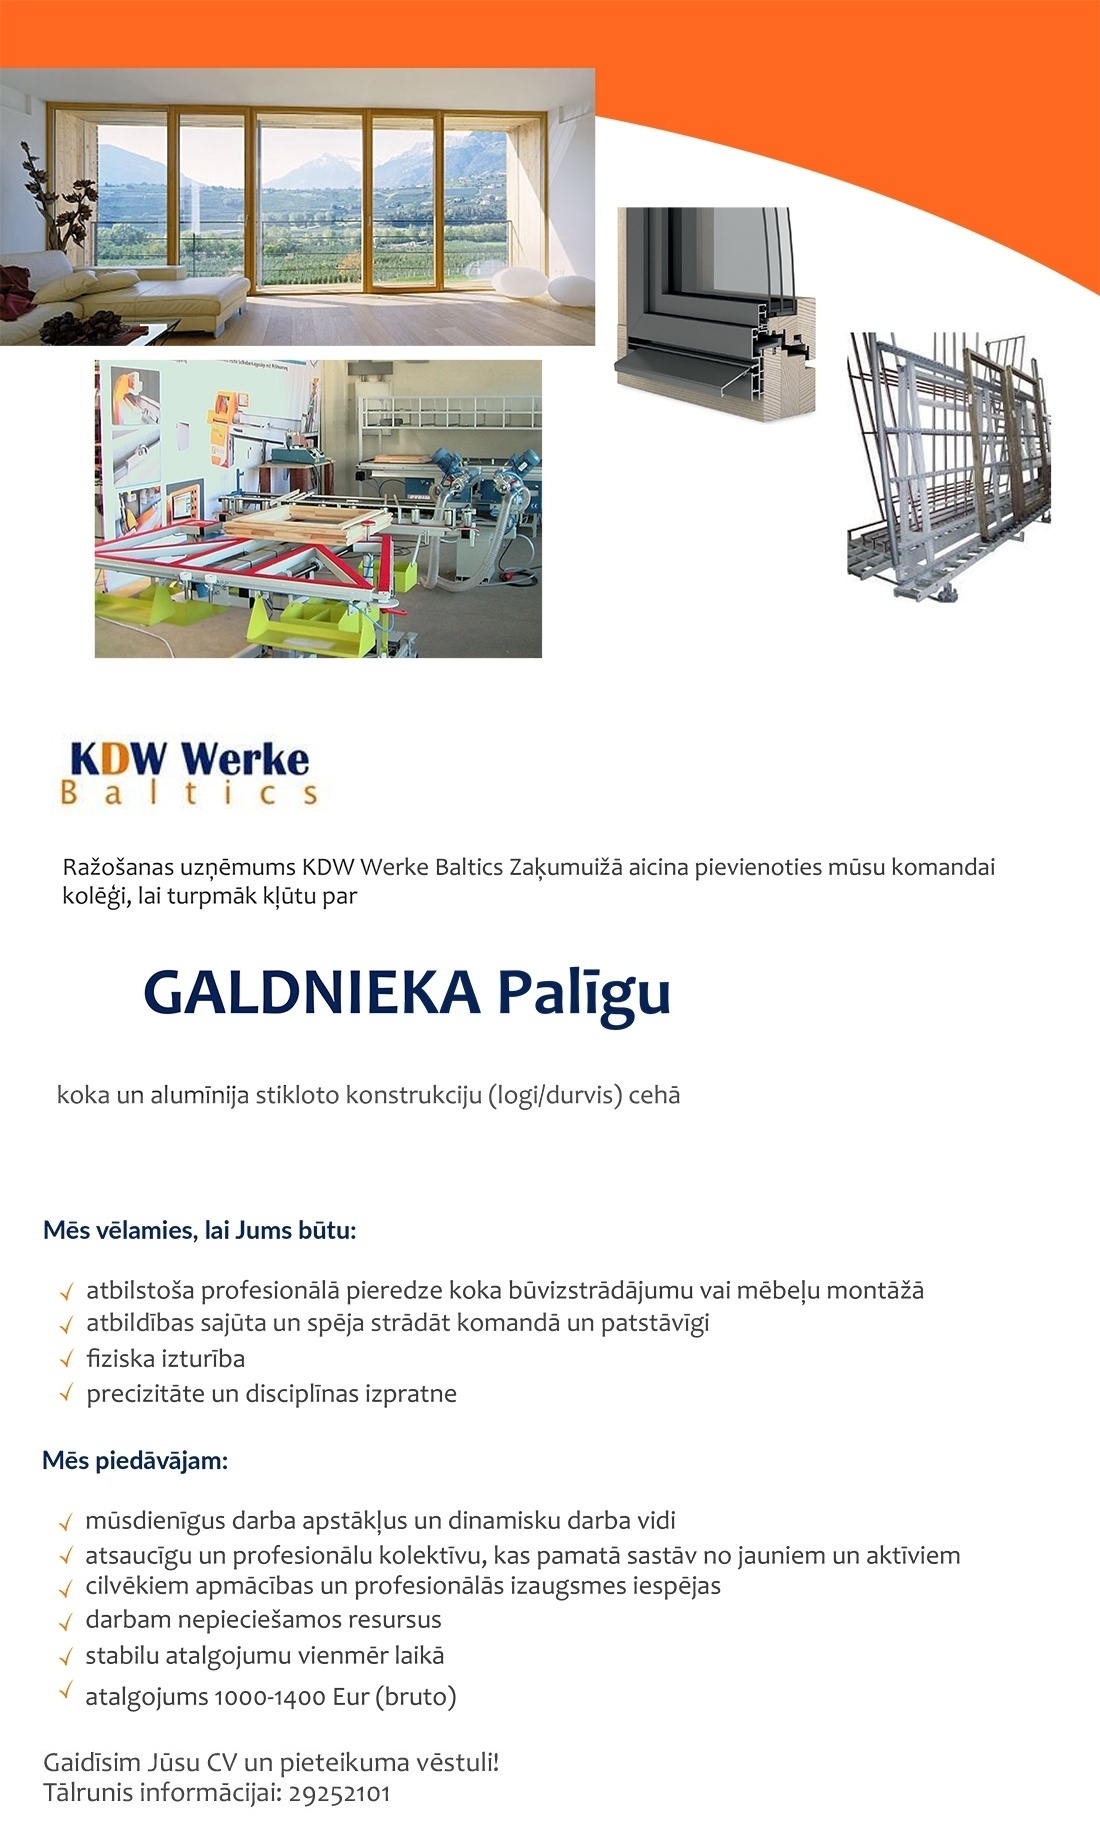 KDW Werke Baltics, SIA Galdnieka palīgs/-dze